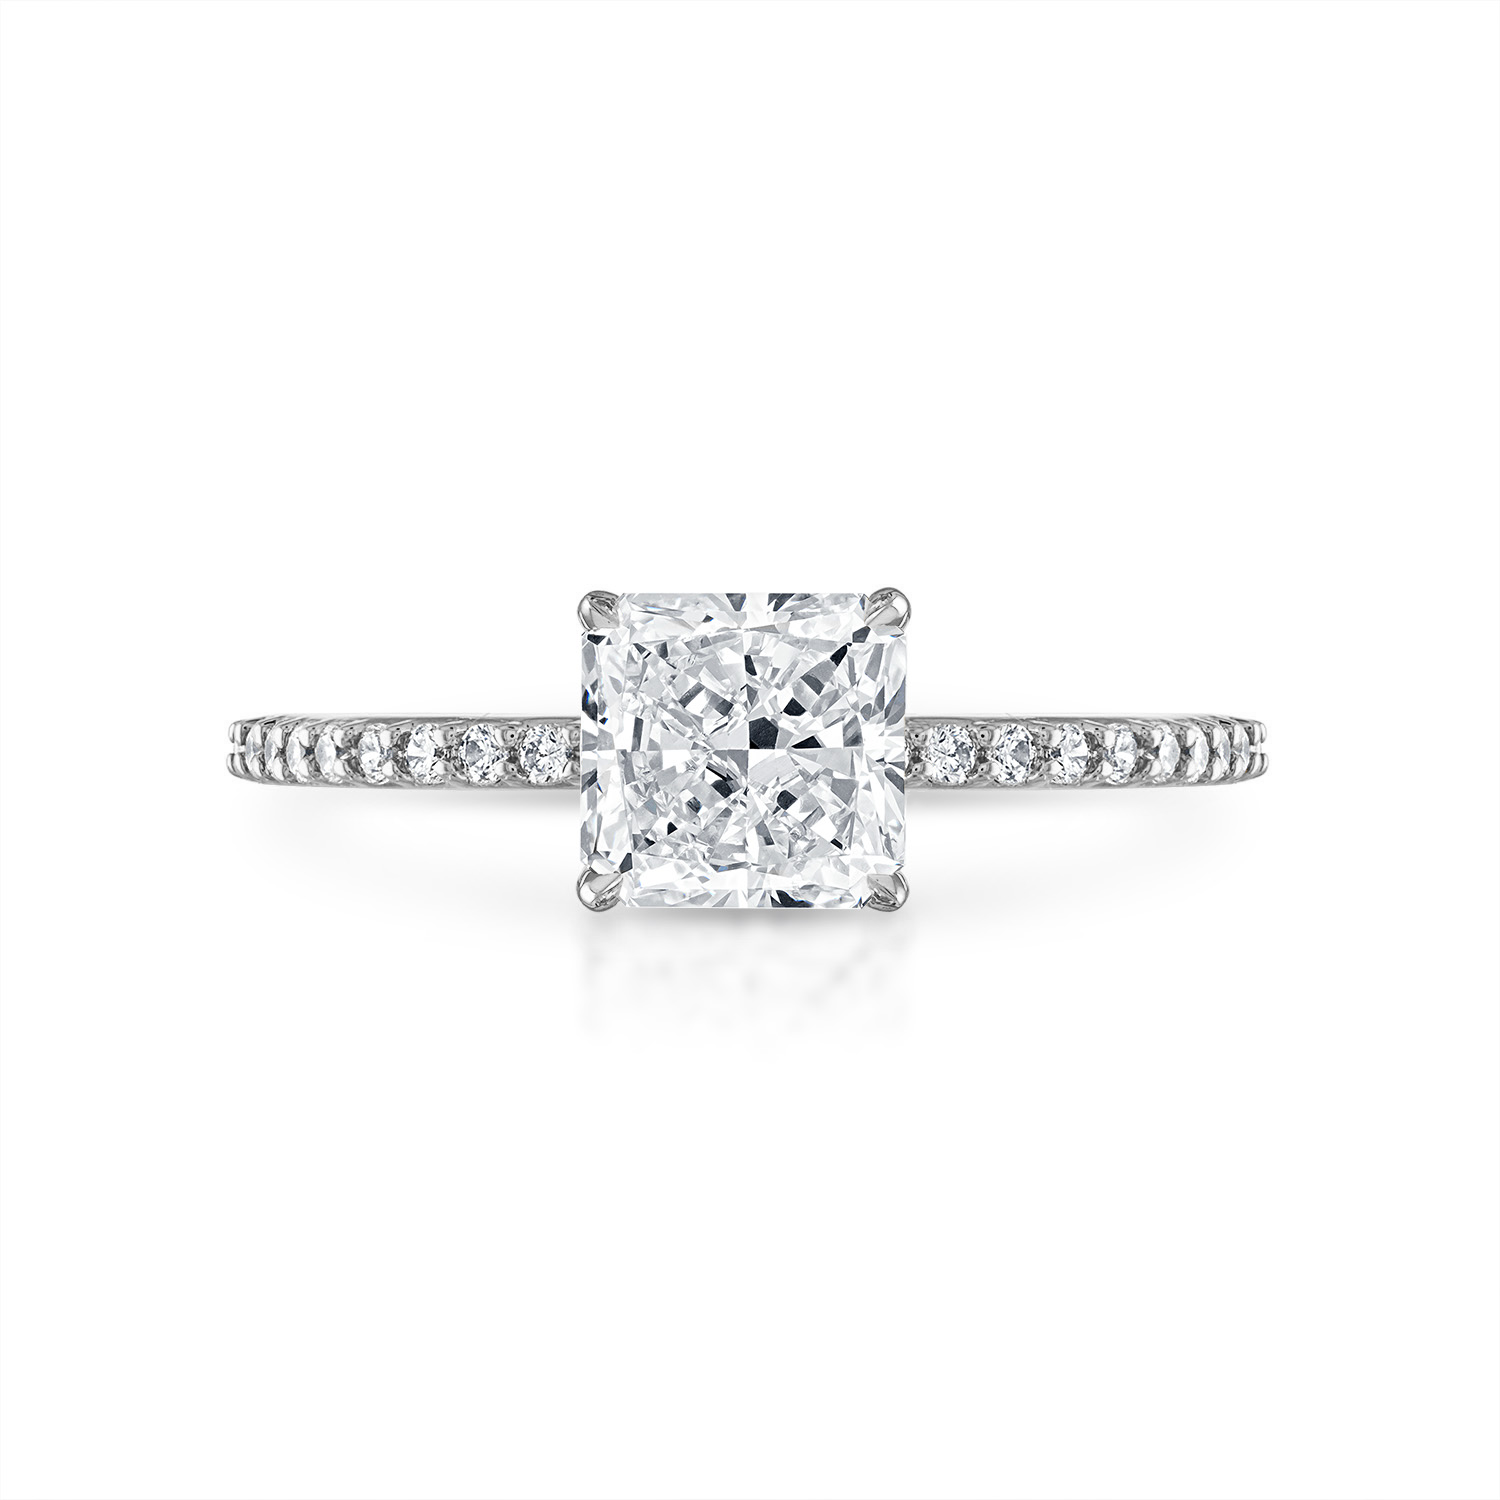 Radiant Pave Engagement Ring in Platinum